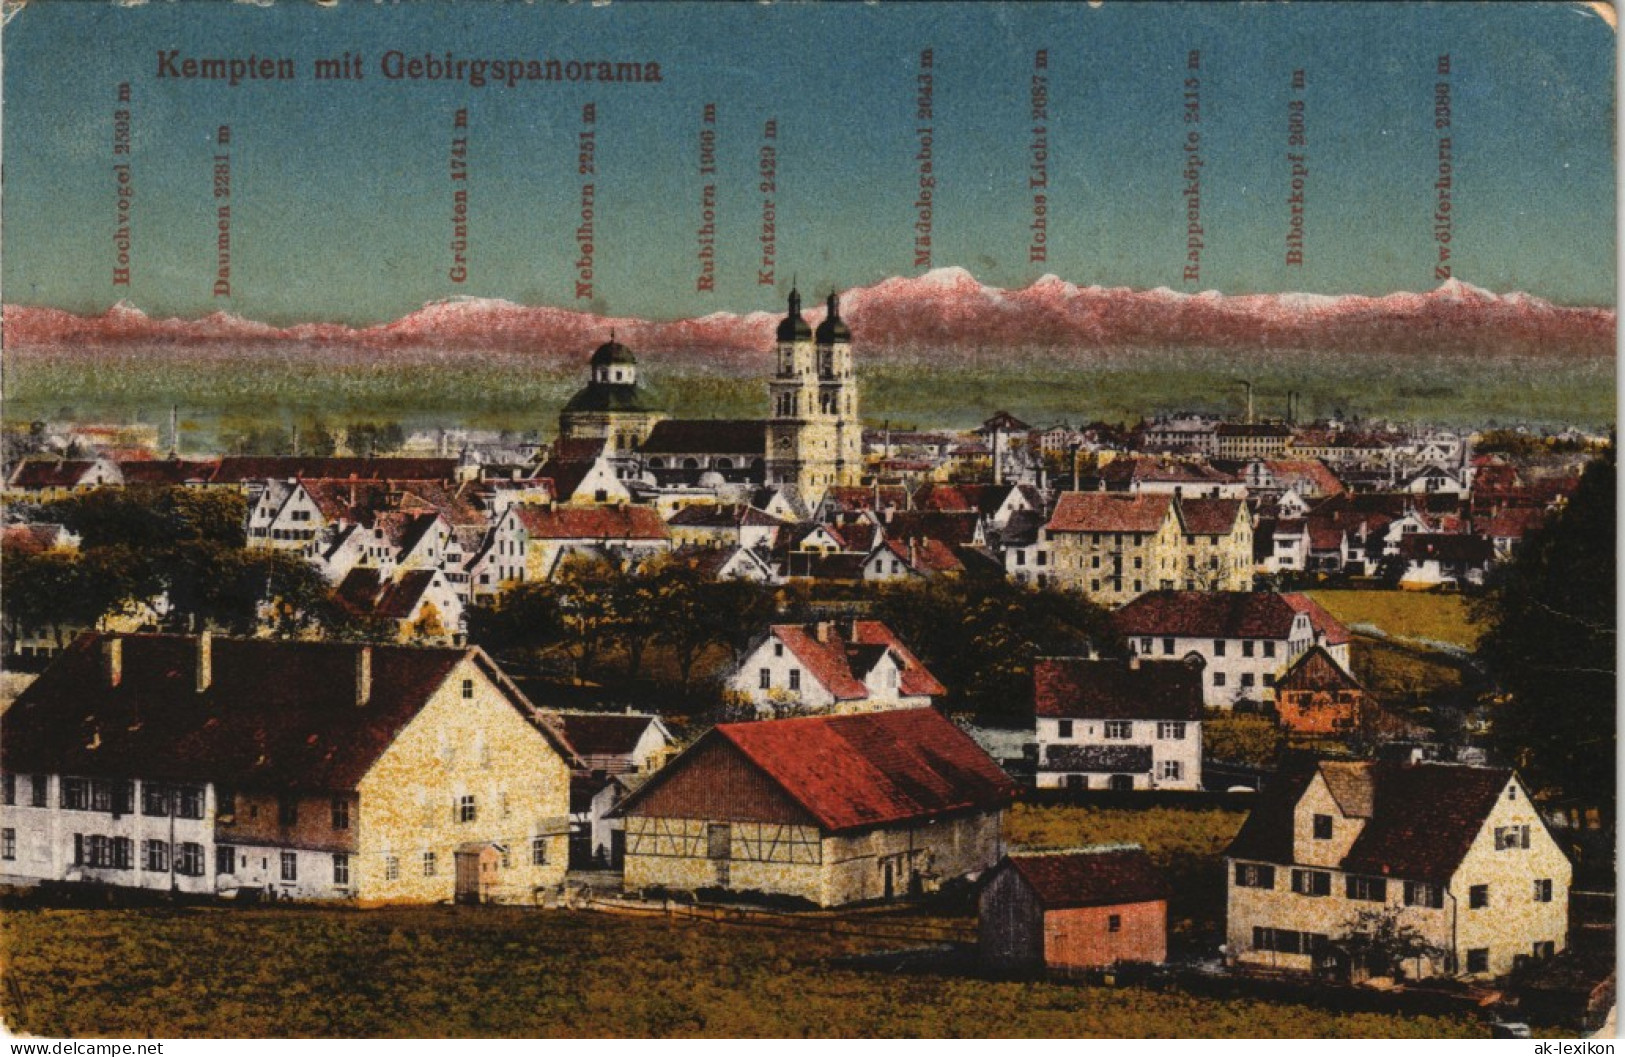 Ansichtskarte Kempten (Allgäu) Panorama-Ansicht Stadt & Gebirgspanorama 1920 - Kempten